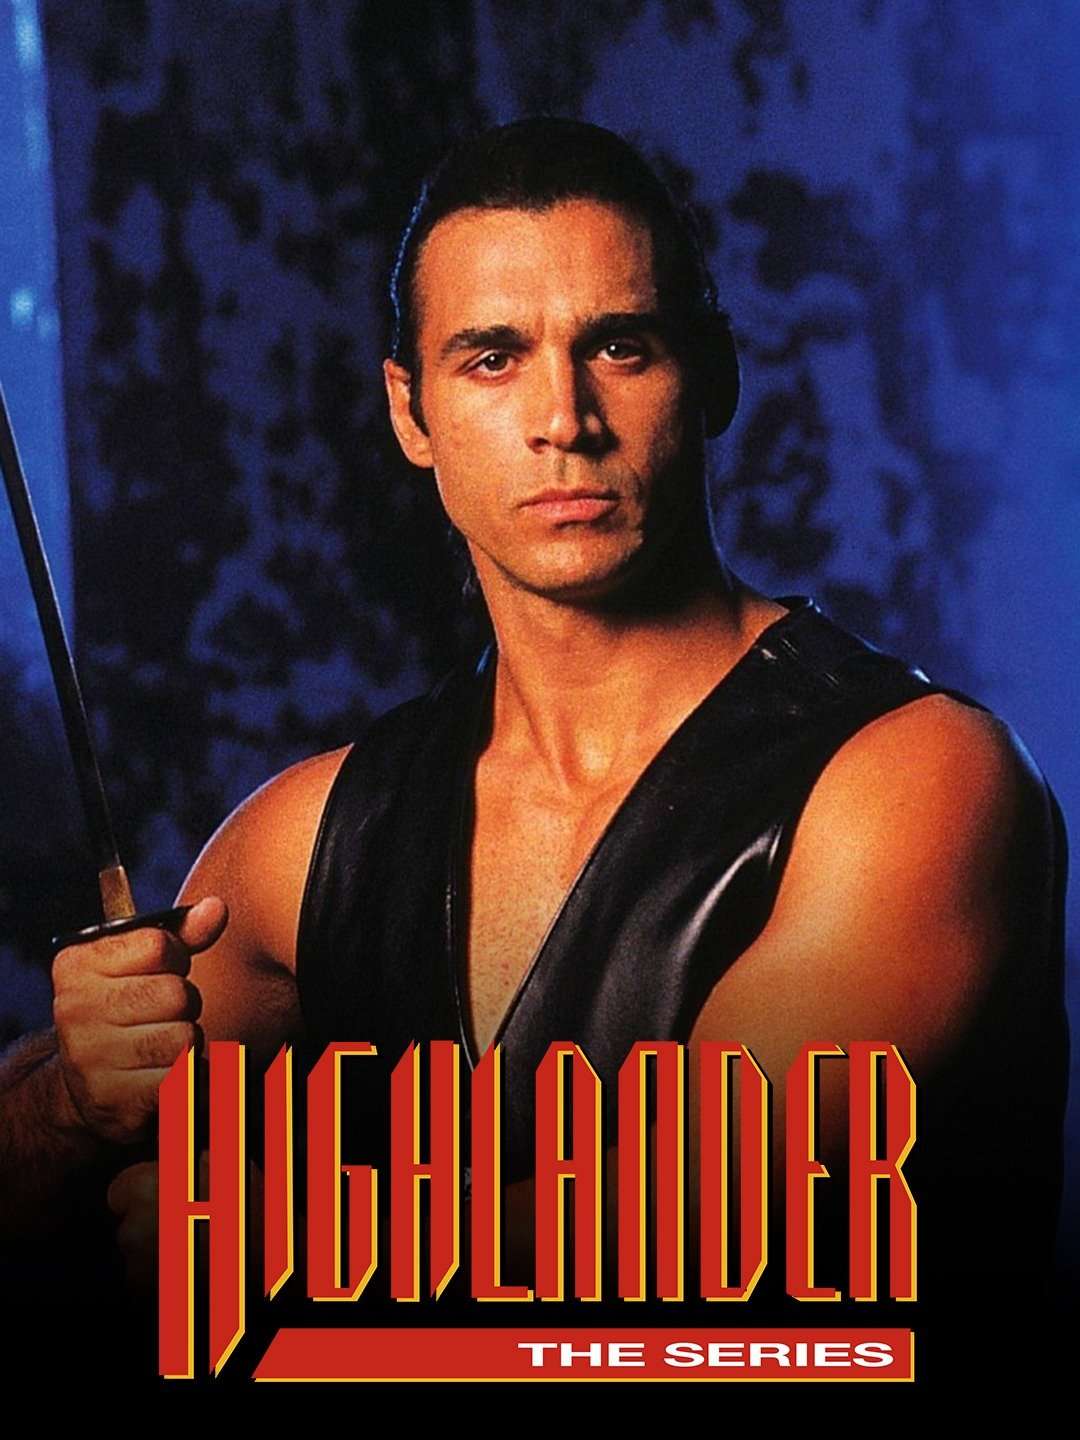 HIGHLANDER THE SERIES (1992)